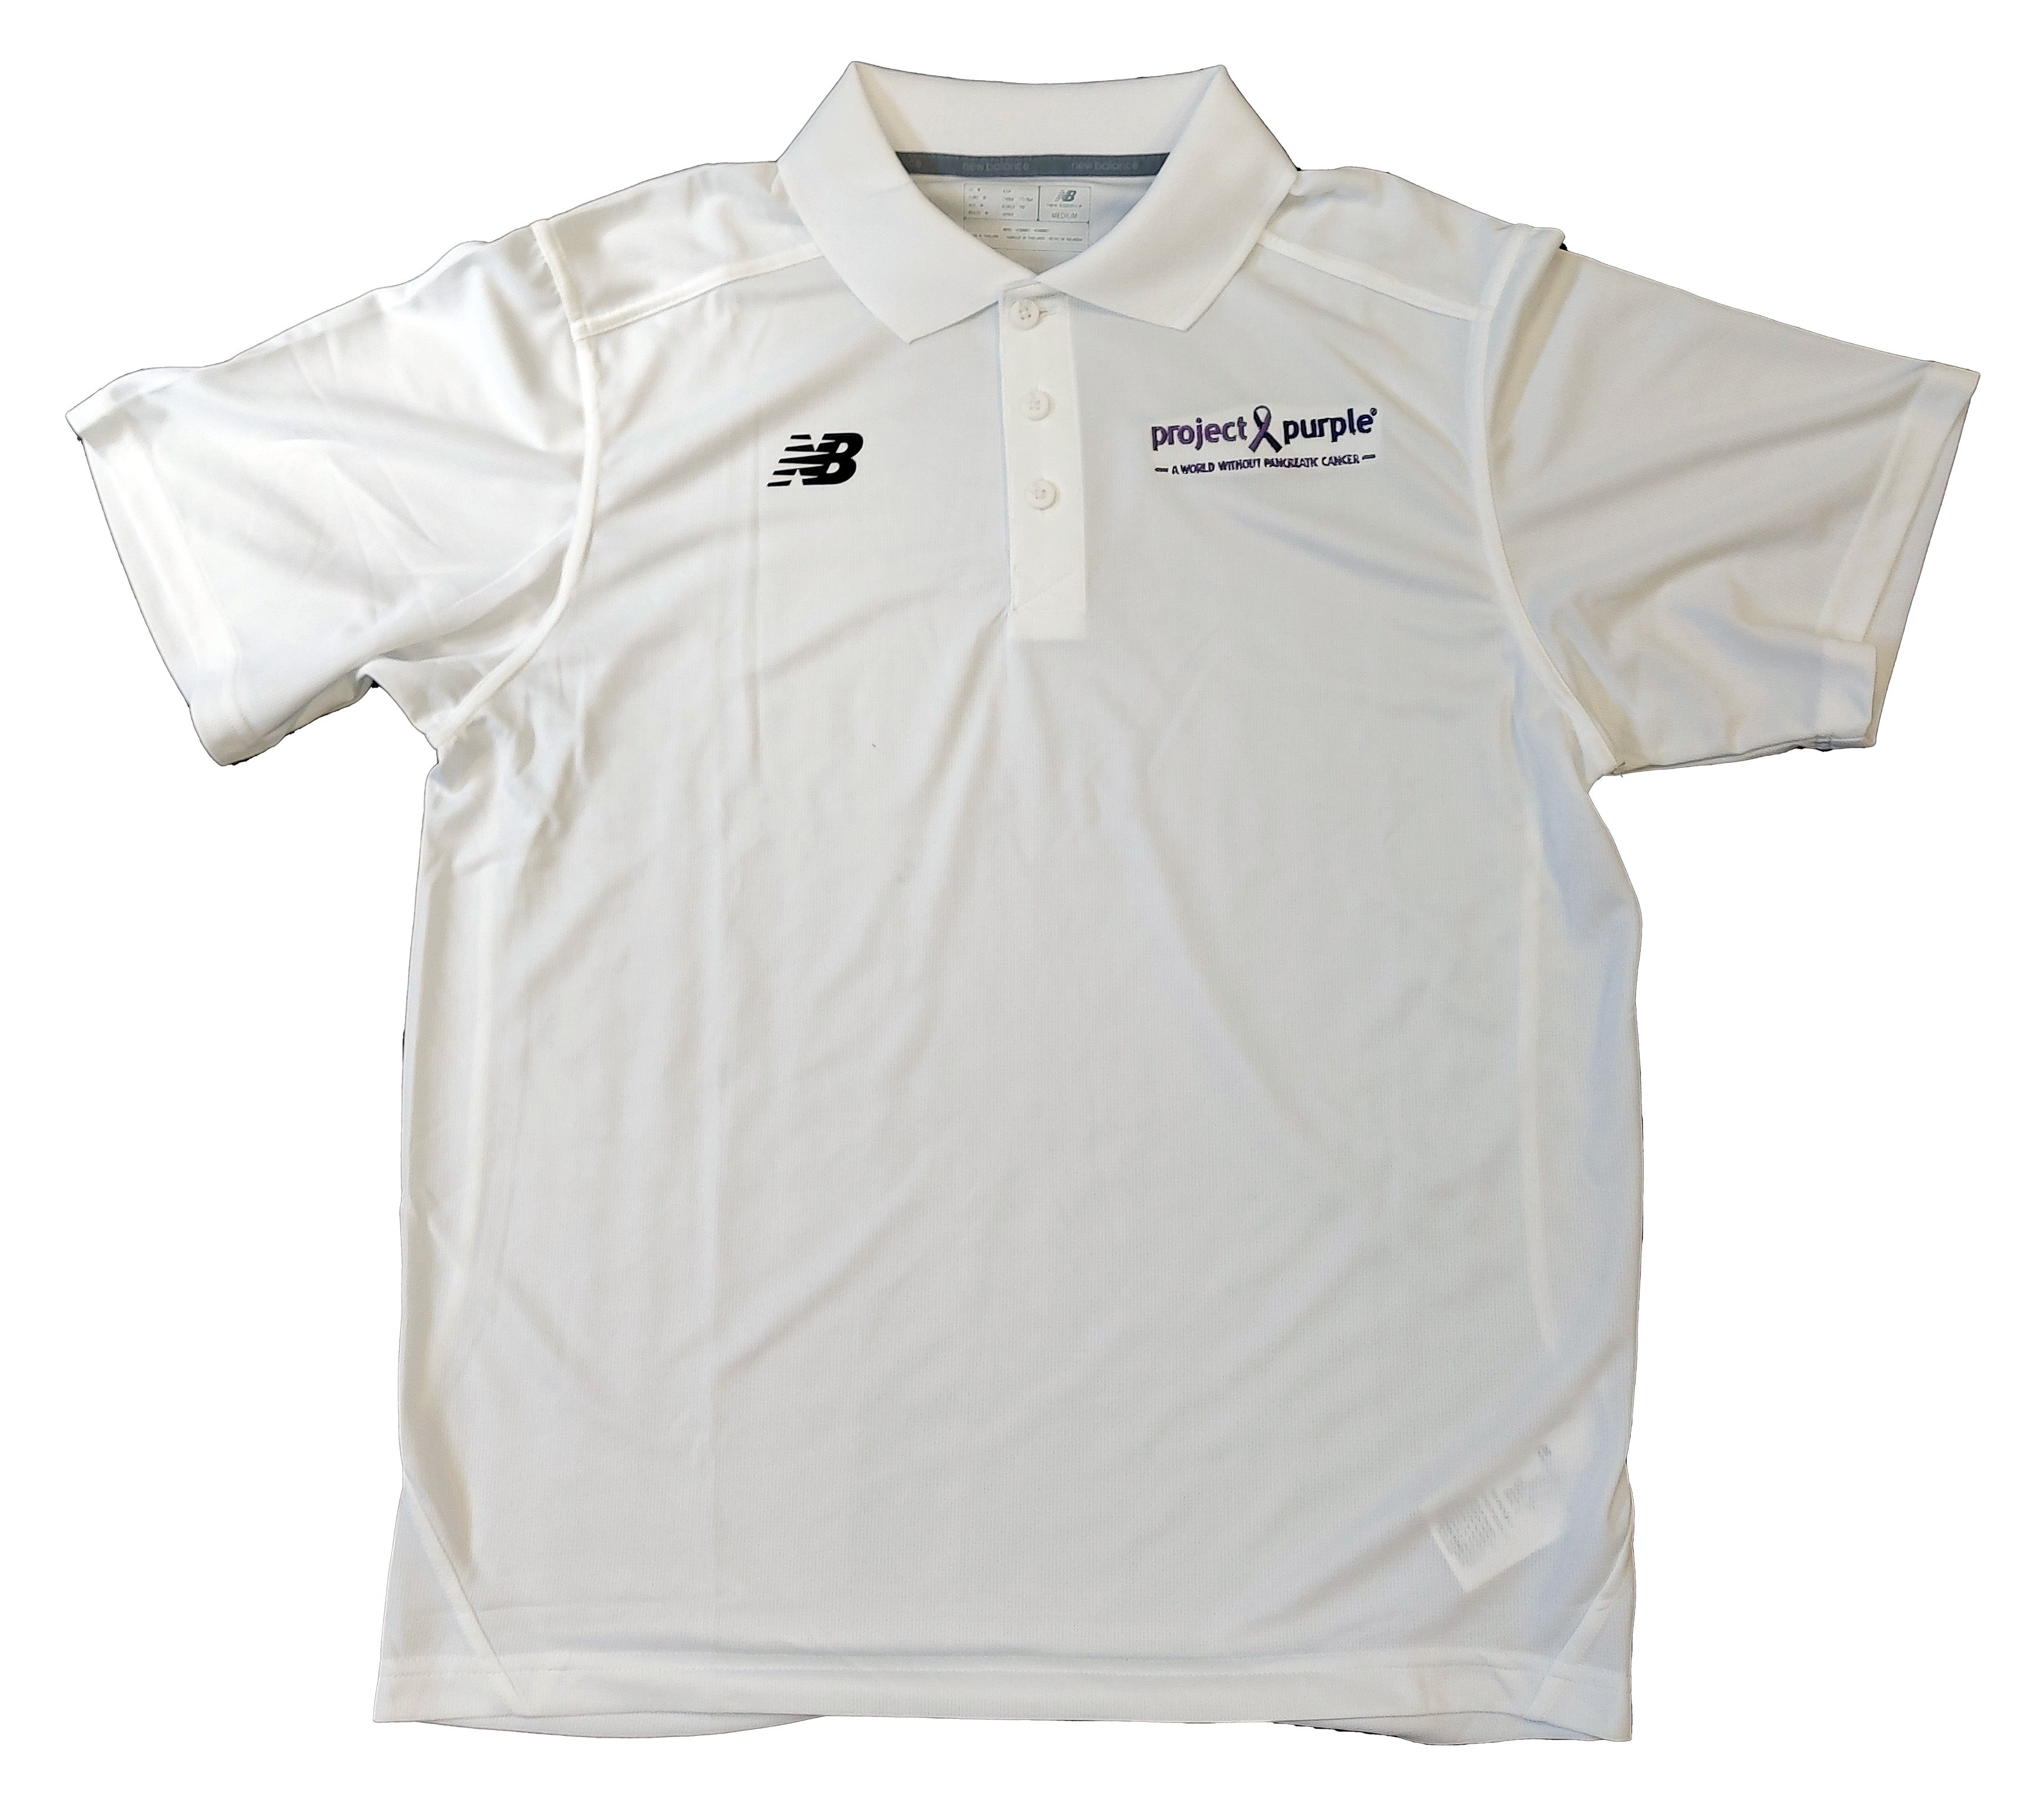 New Balance Golf Shirt – Project Purple